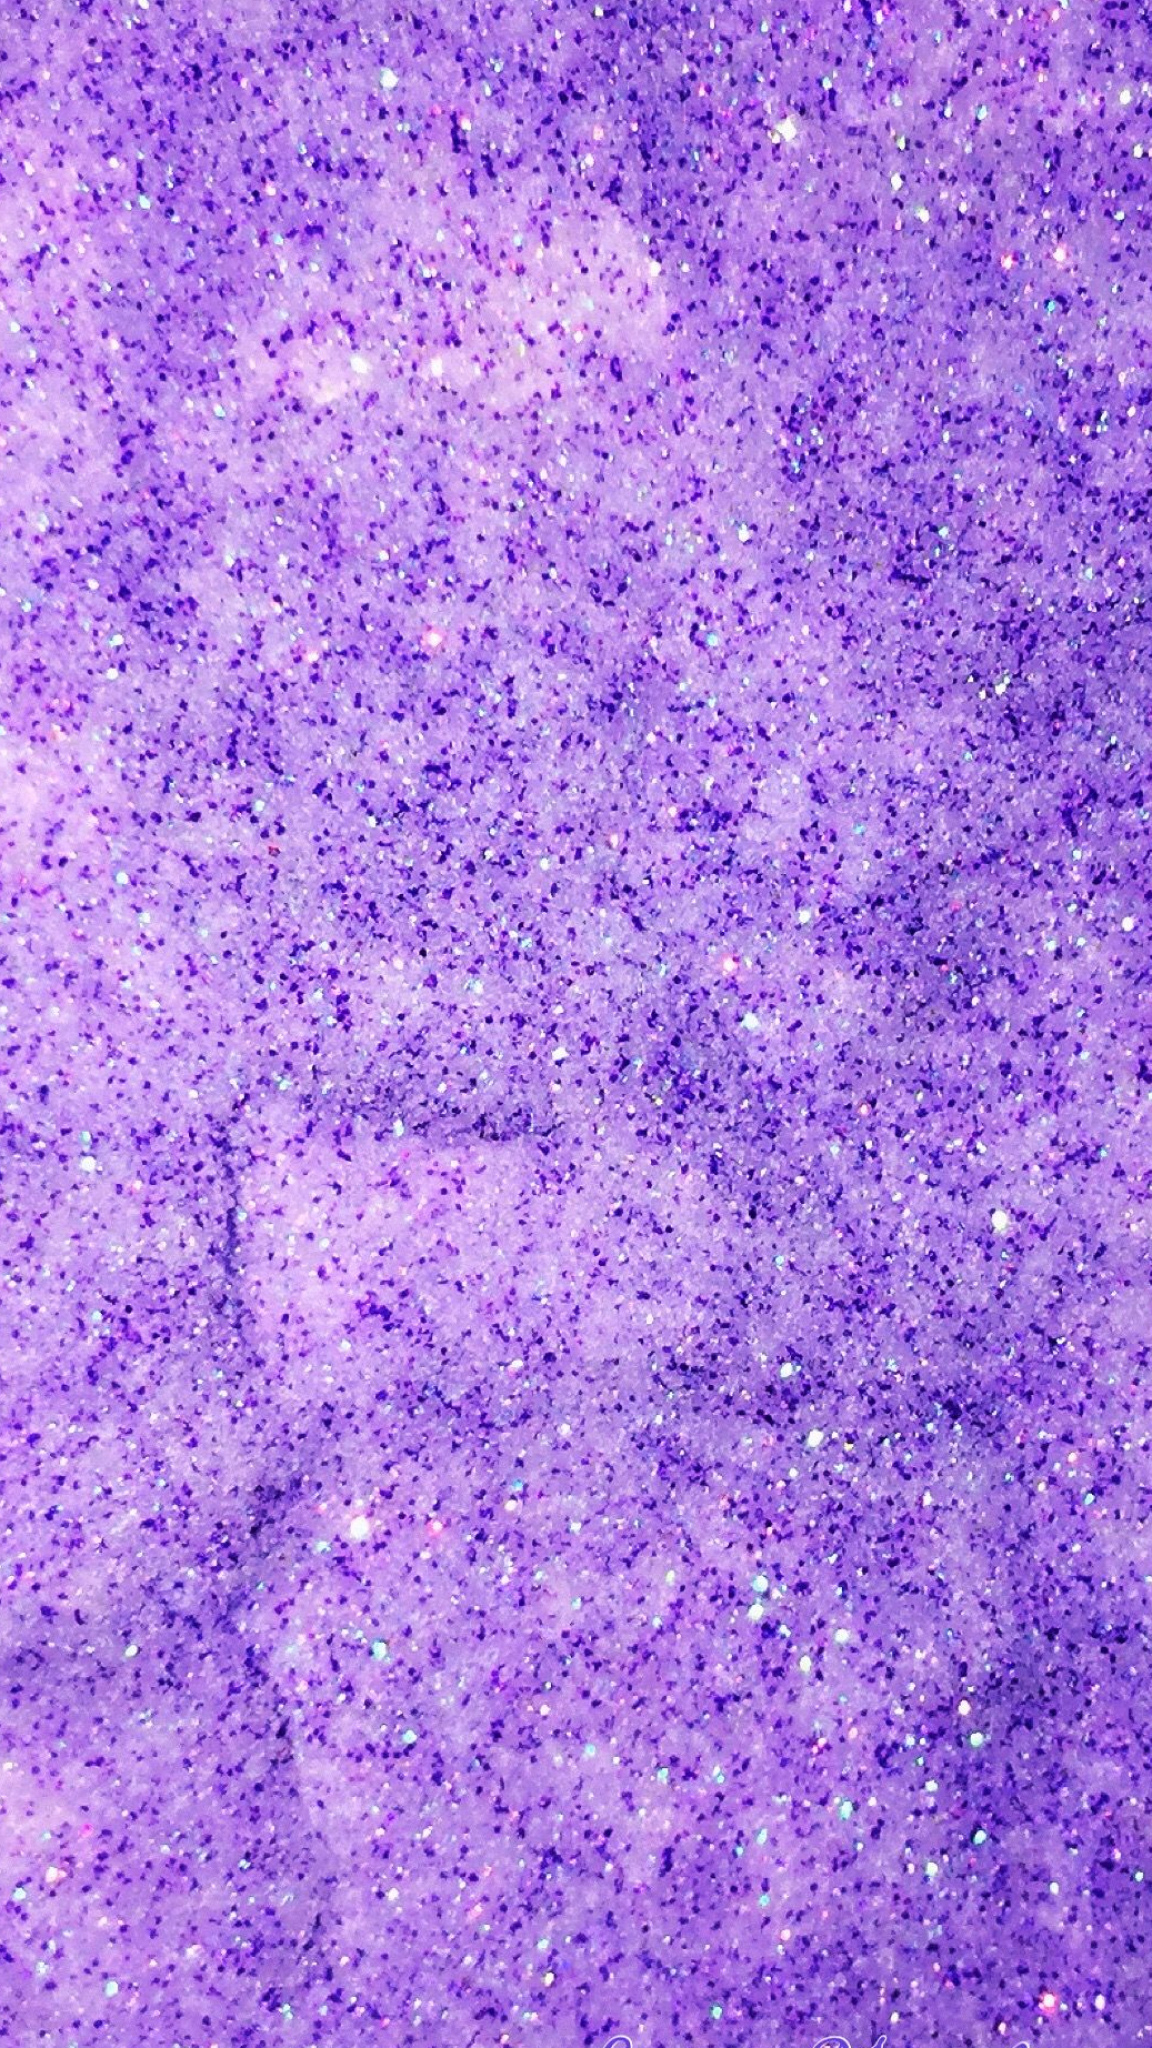 1152x2048 Glitter phone wallpaper Sparkle background sparkling glittery girly pretty purple | Wallpapers roxos, Planos de fundo, Papel de parede rox